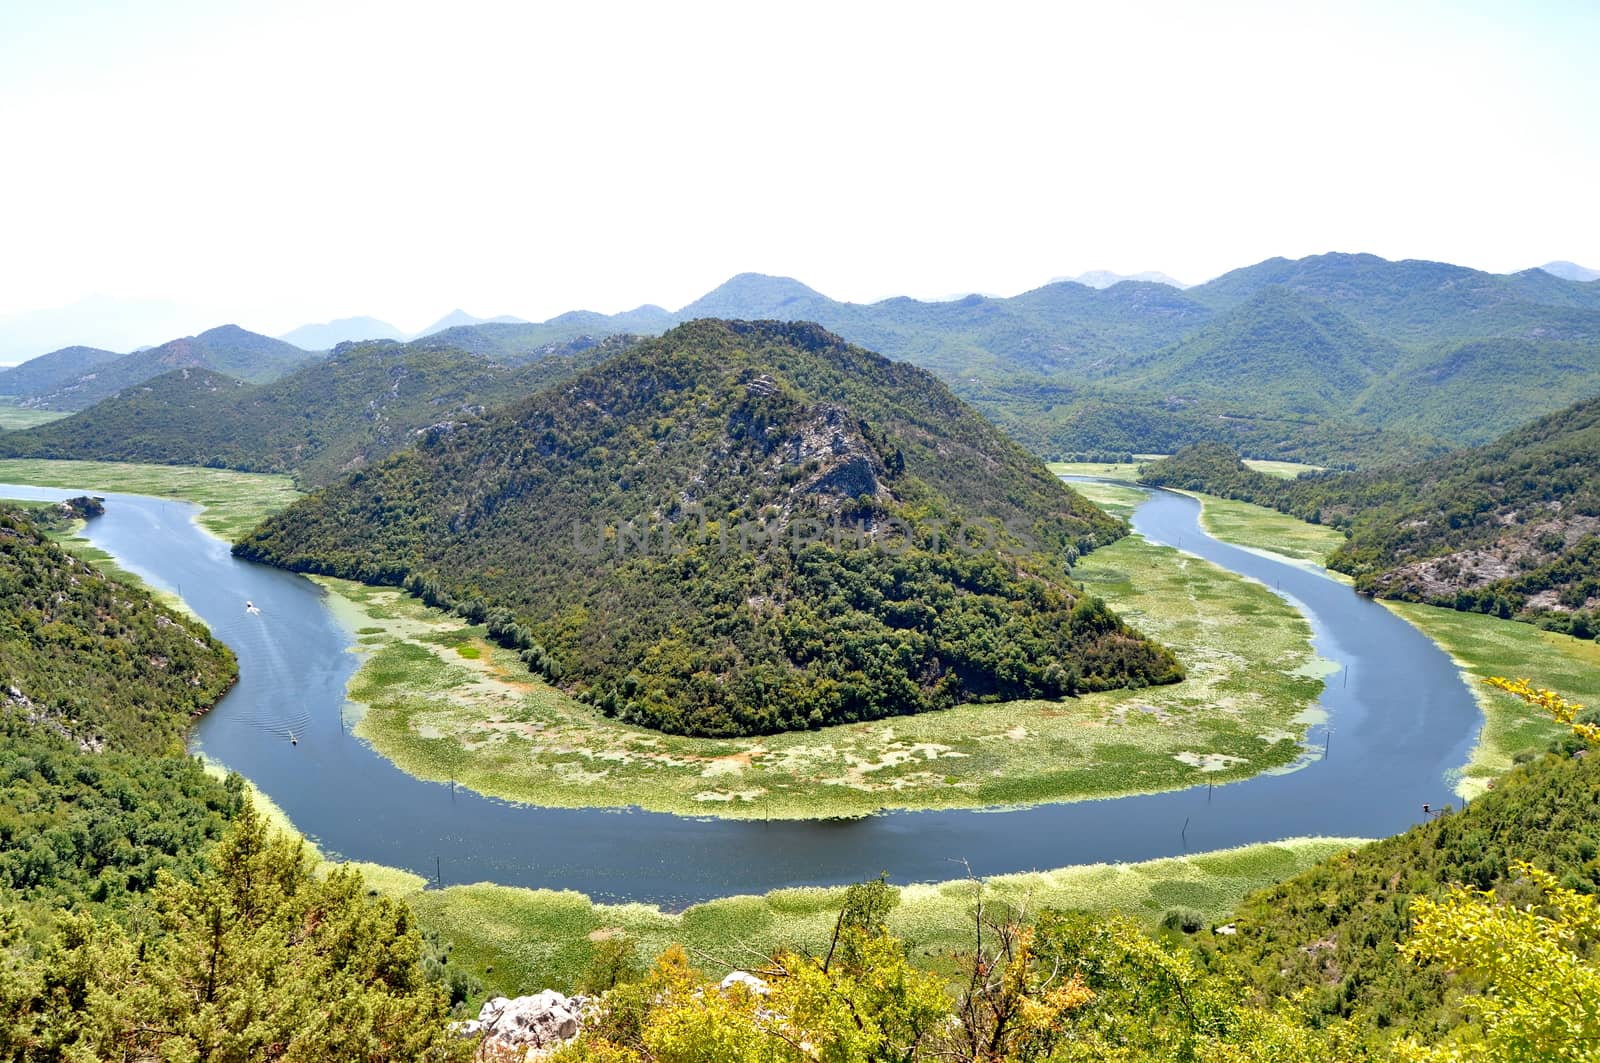 Rijeka Crnojevica in Monte Negro